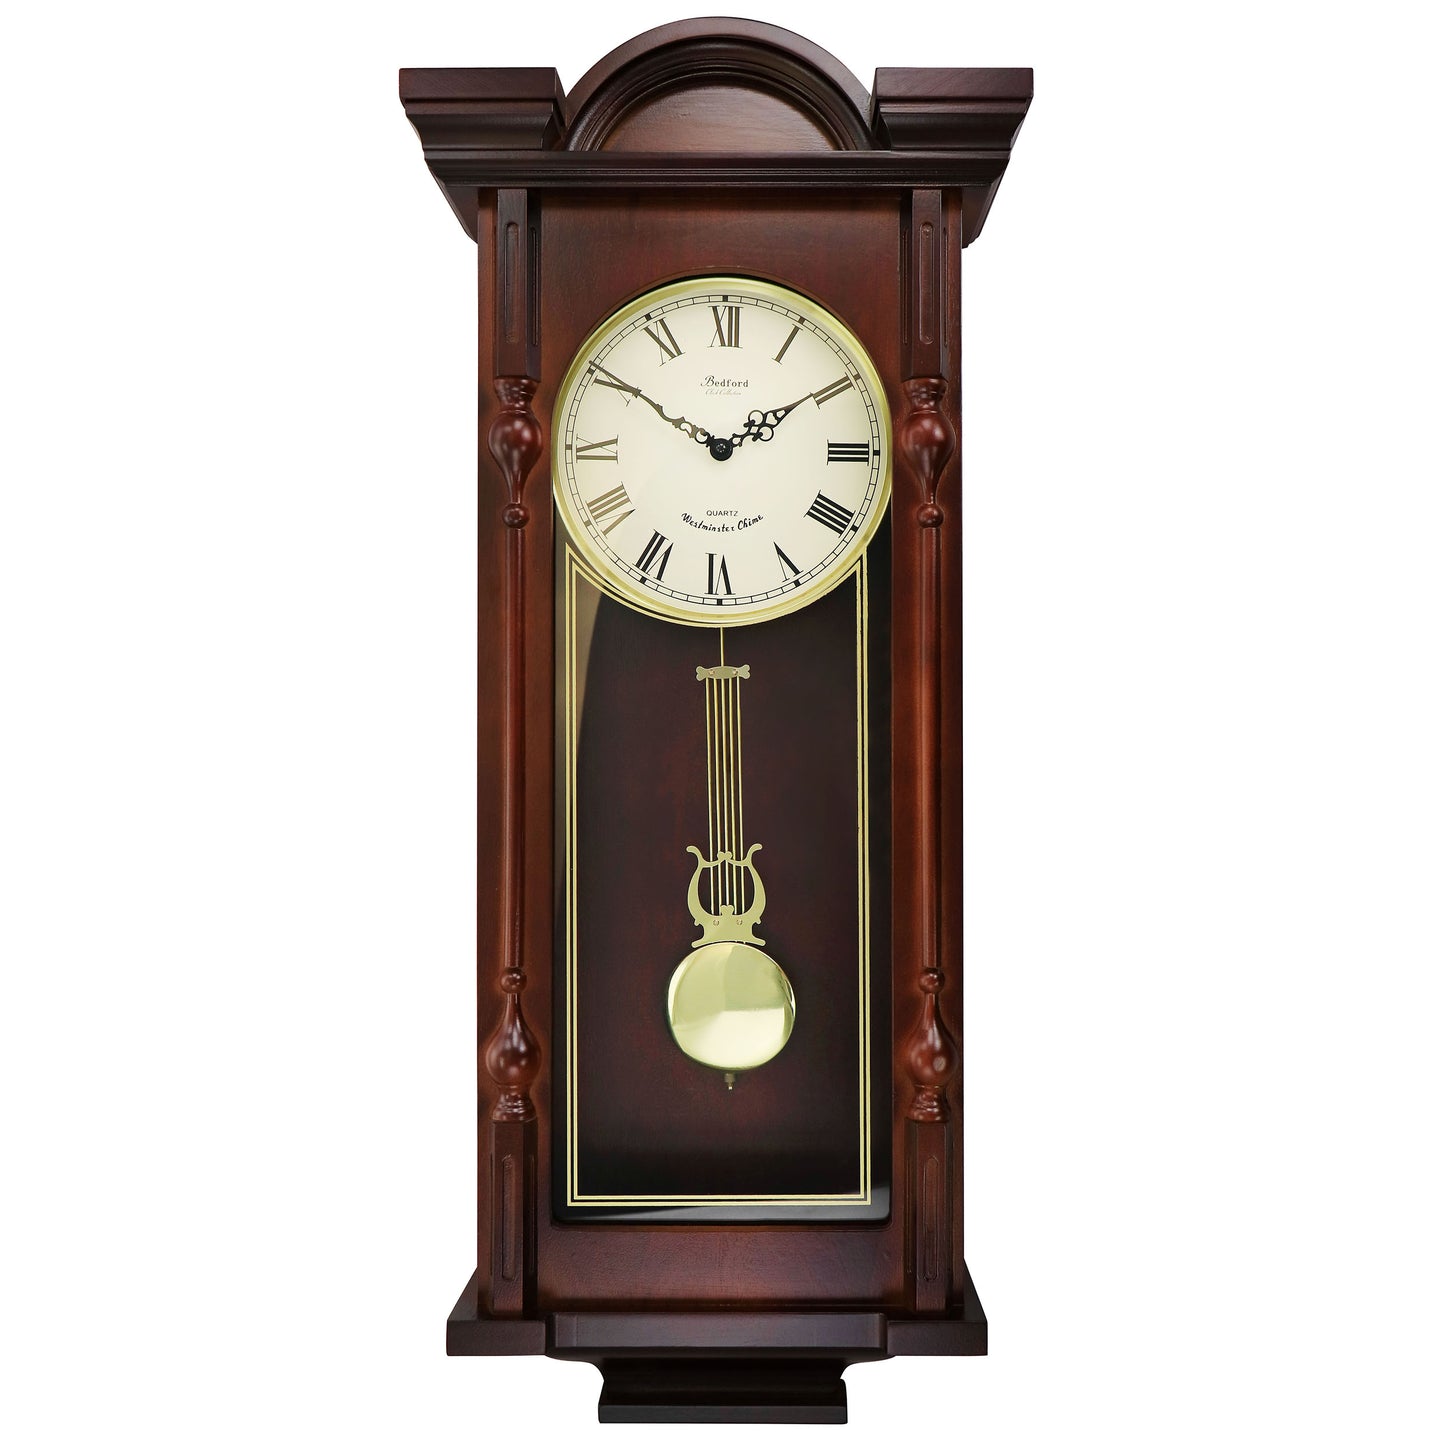 Bedford Clock Collection Bedford Clock Collection Grand 31 Inch Chiming Pendulum Wall Clock in Antique Mahogany Cherry Finish